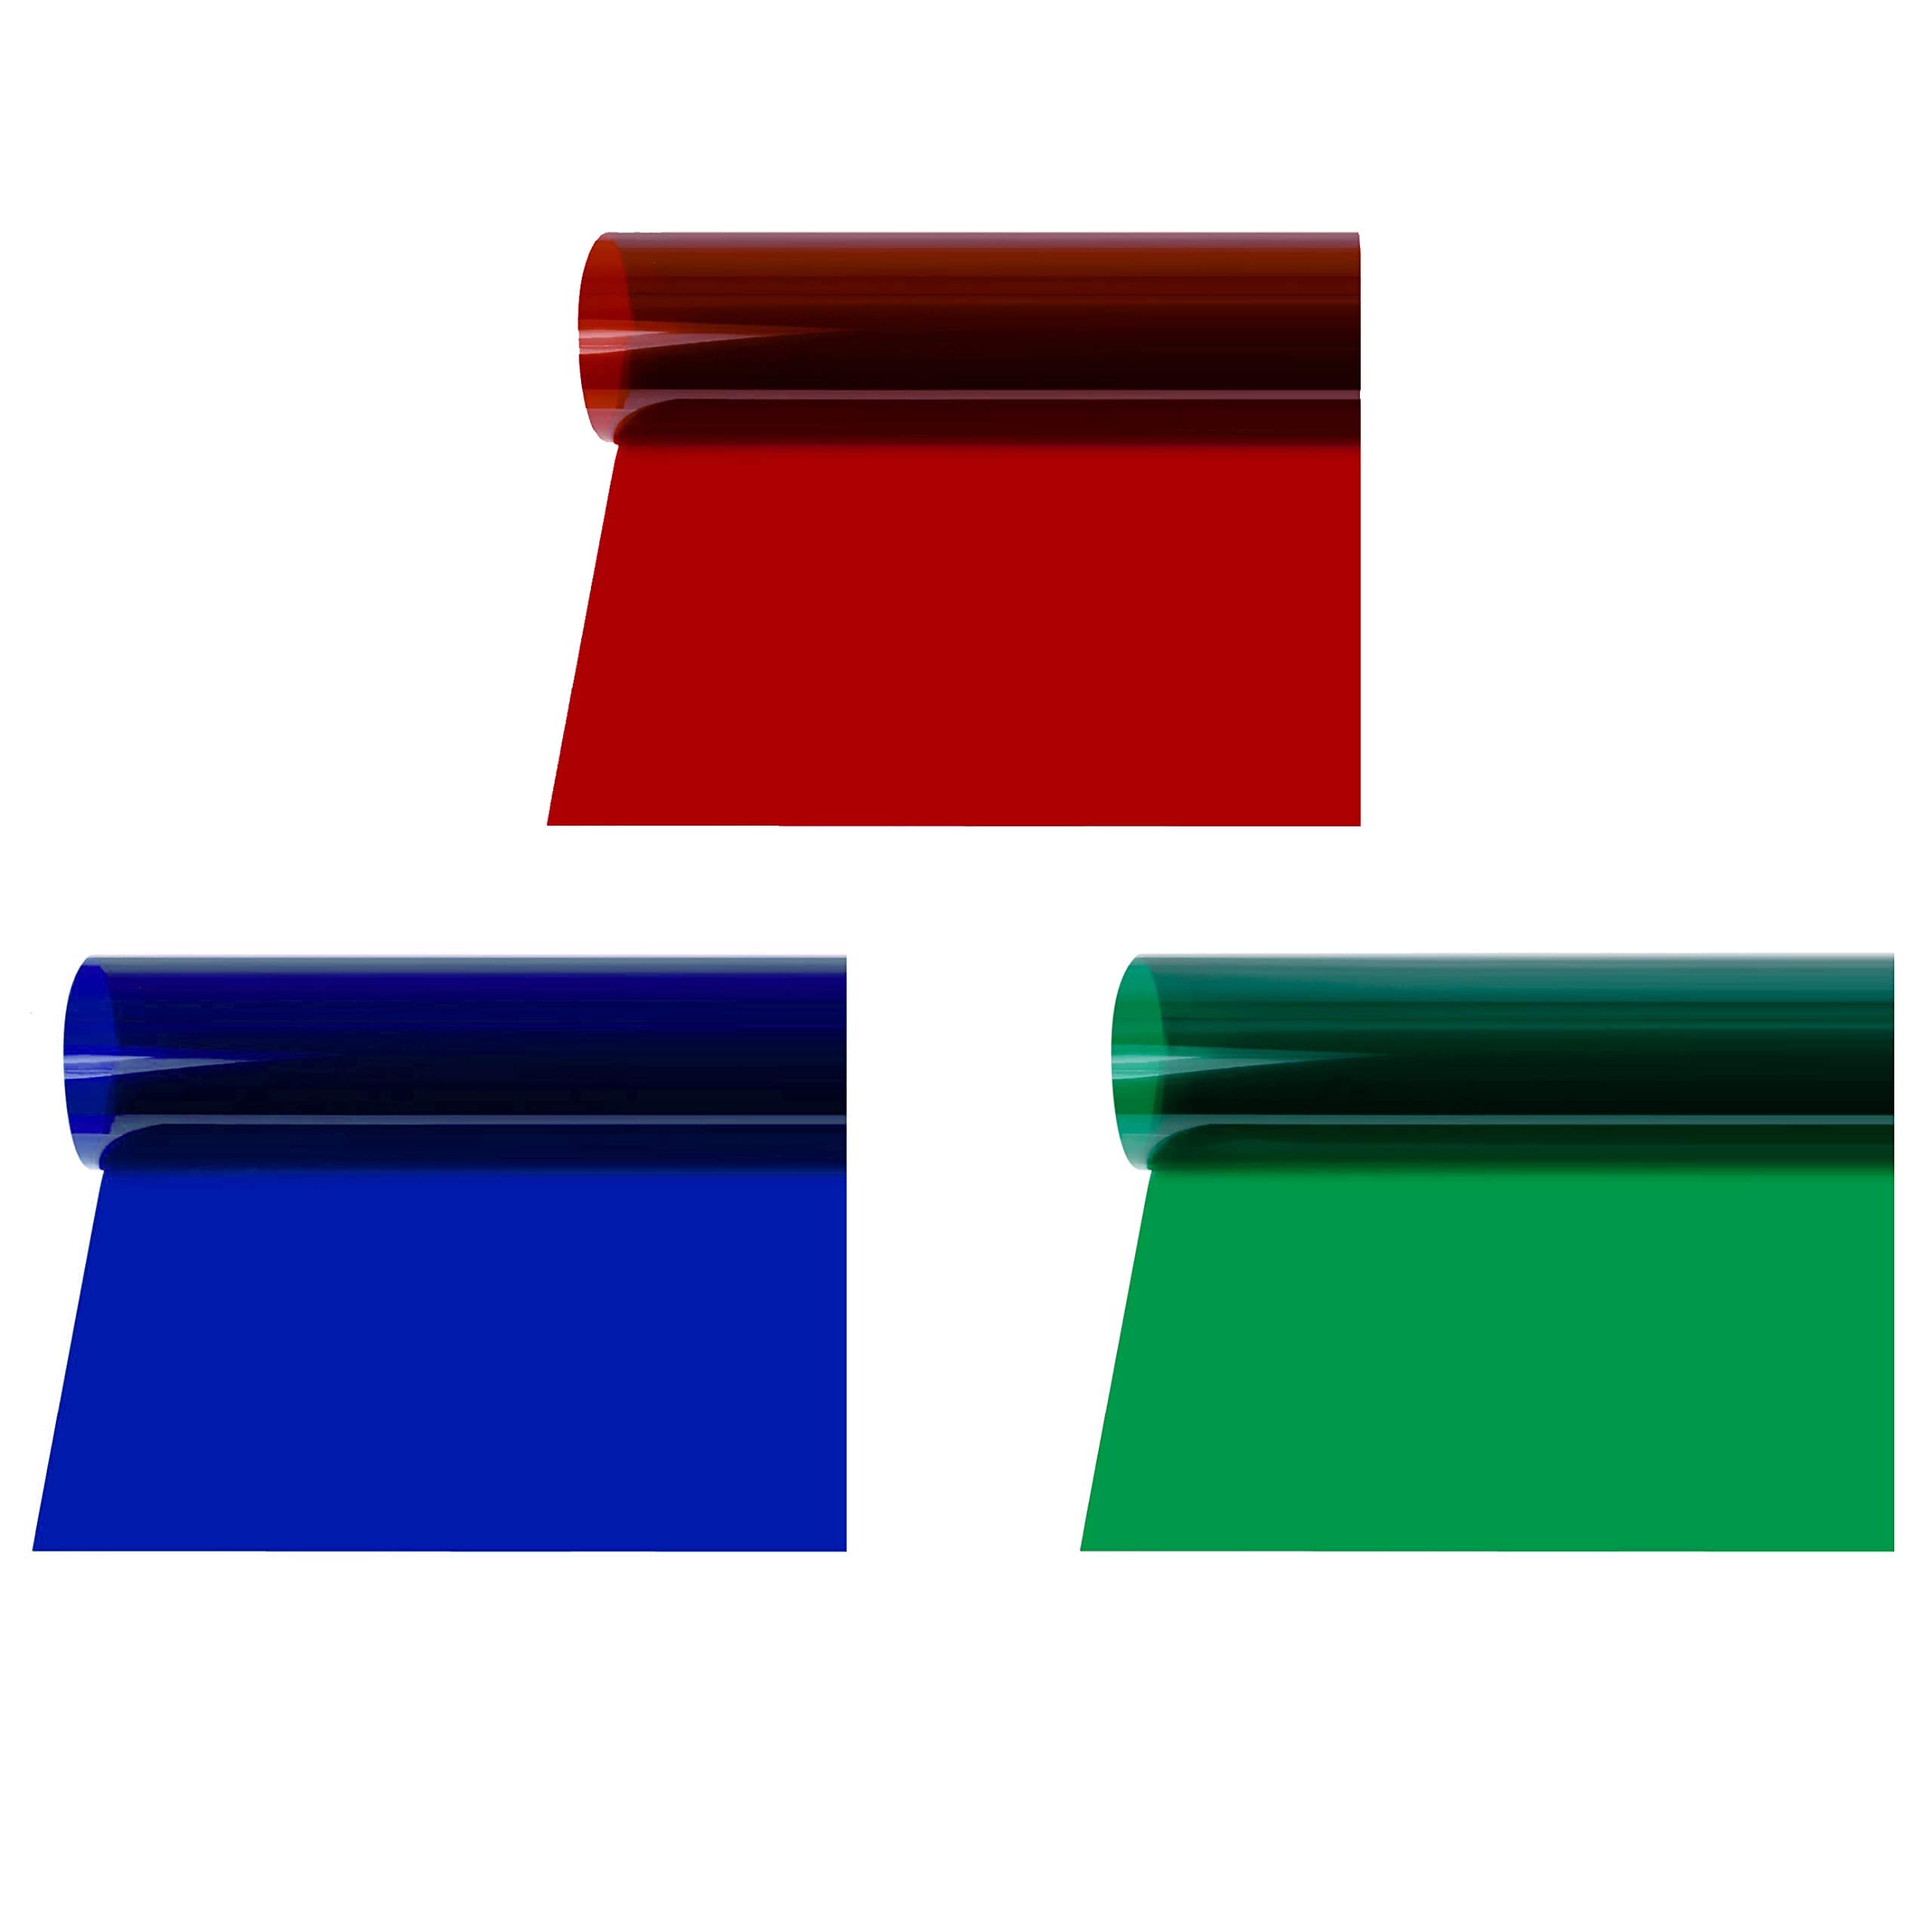 Selens 40x50cm Farbfilter Folie Professionell Transparente Farbkorrektur Beleuchtung Folien für Foto Studio Strobe Flash 3 Stück Rot Blau Grün